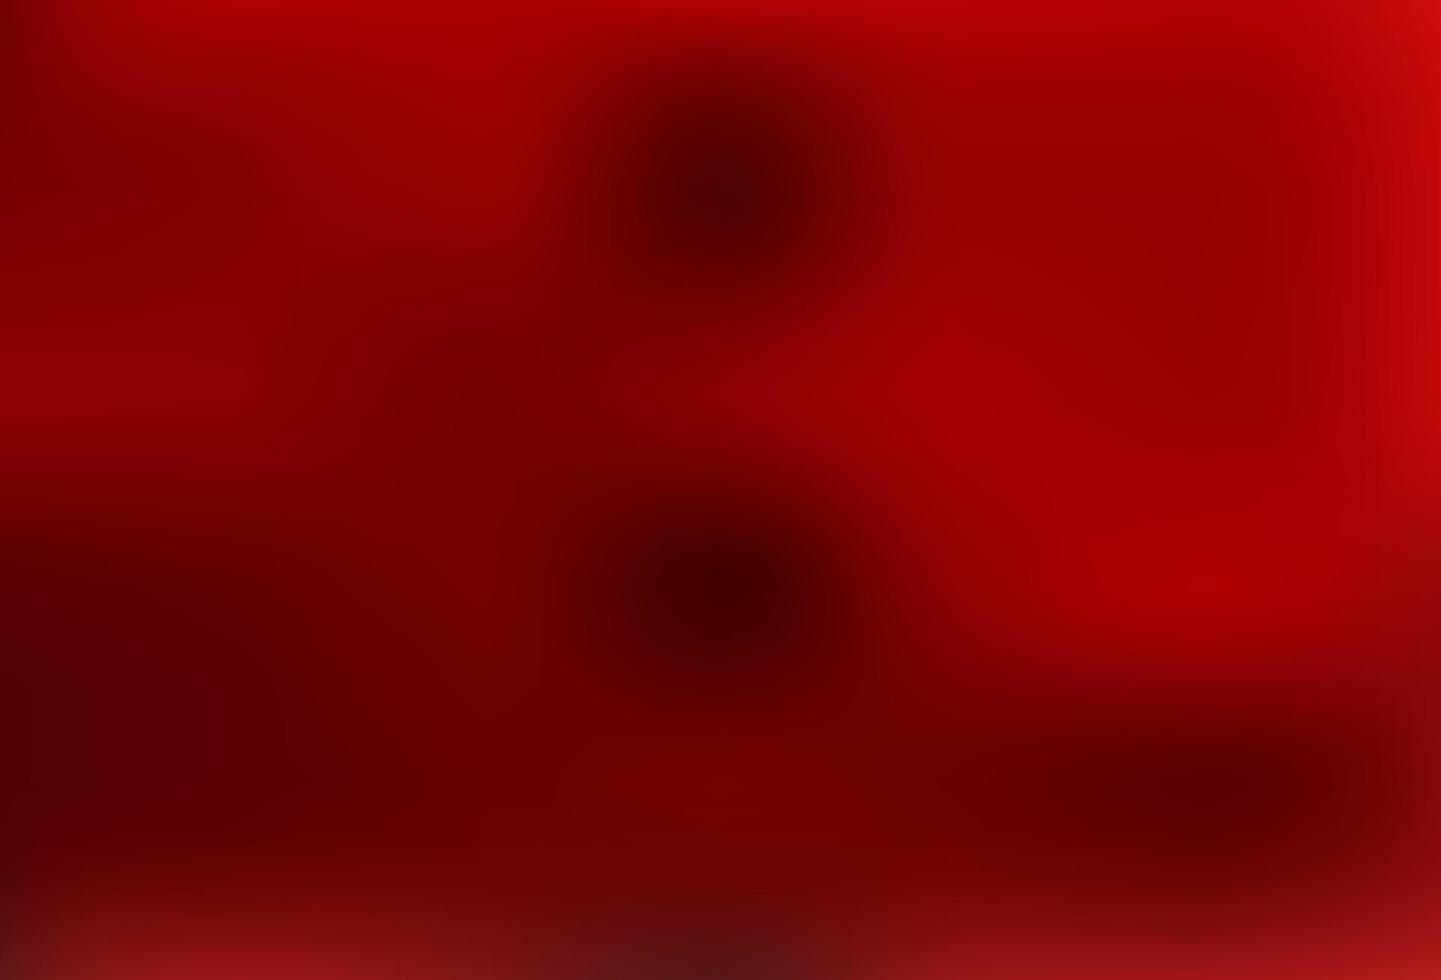 Plantilla borrosa abstracta de vector rojo claro.